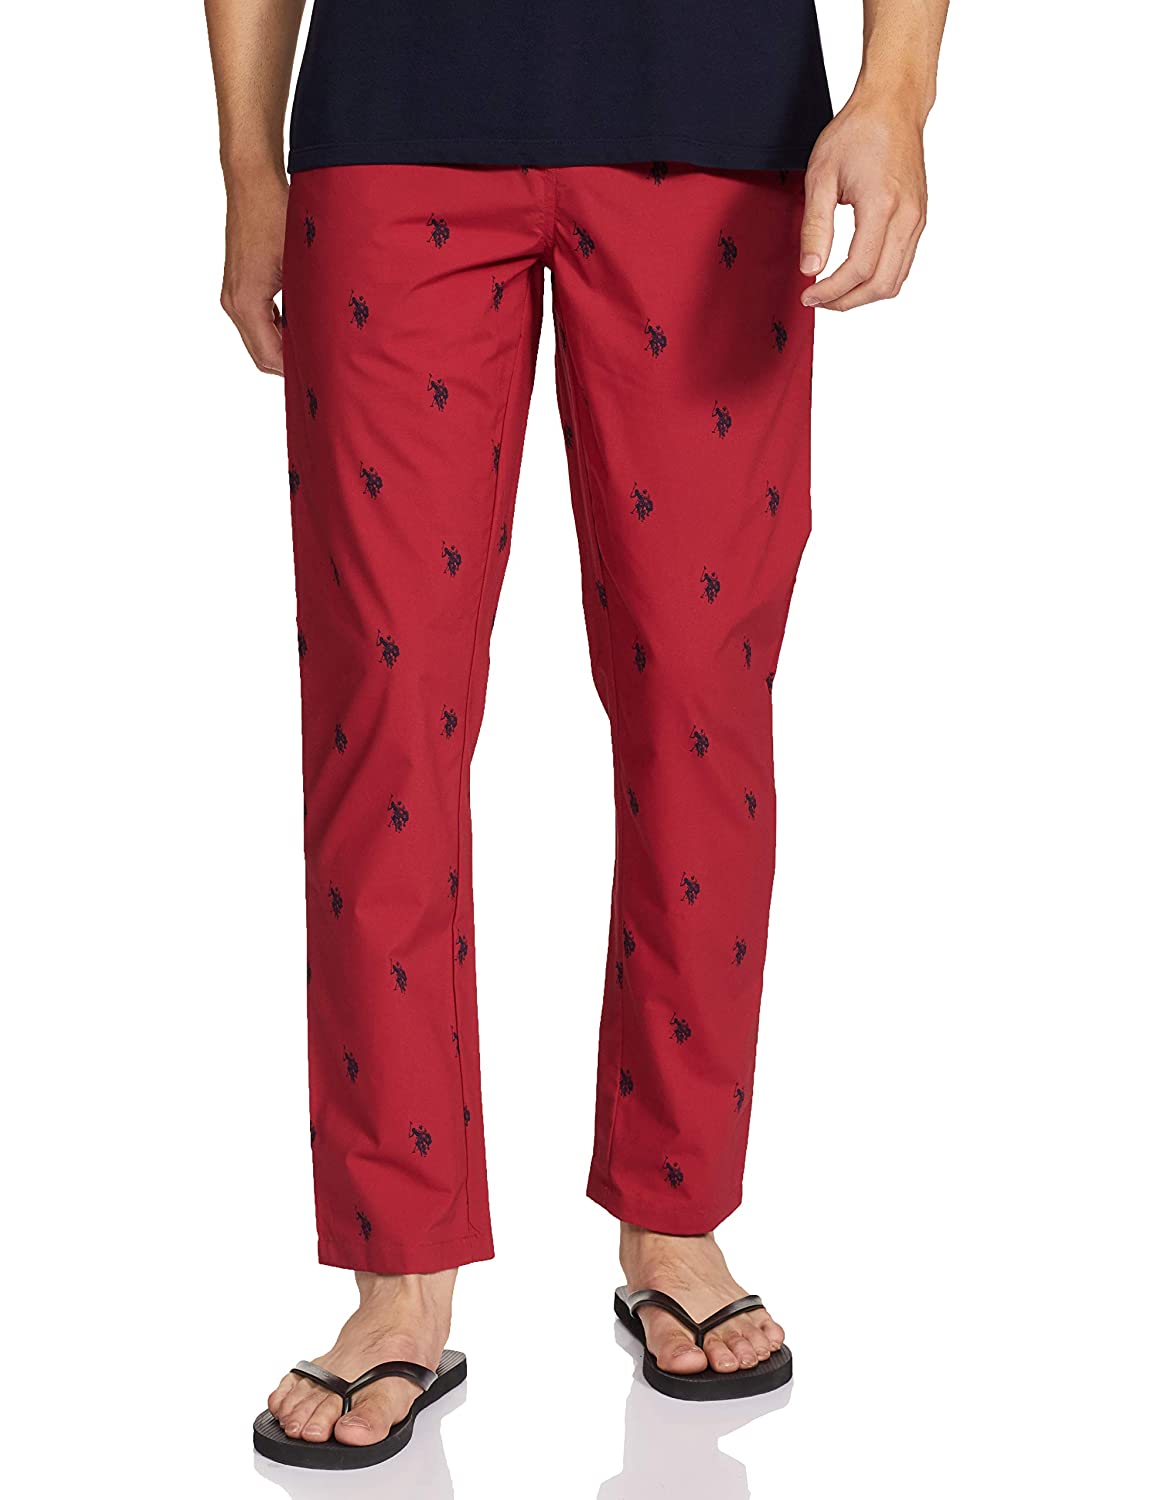 US Polo Red Pyjama Lower Night wear for Men - Stilento